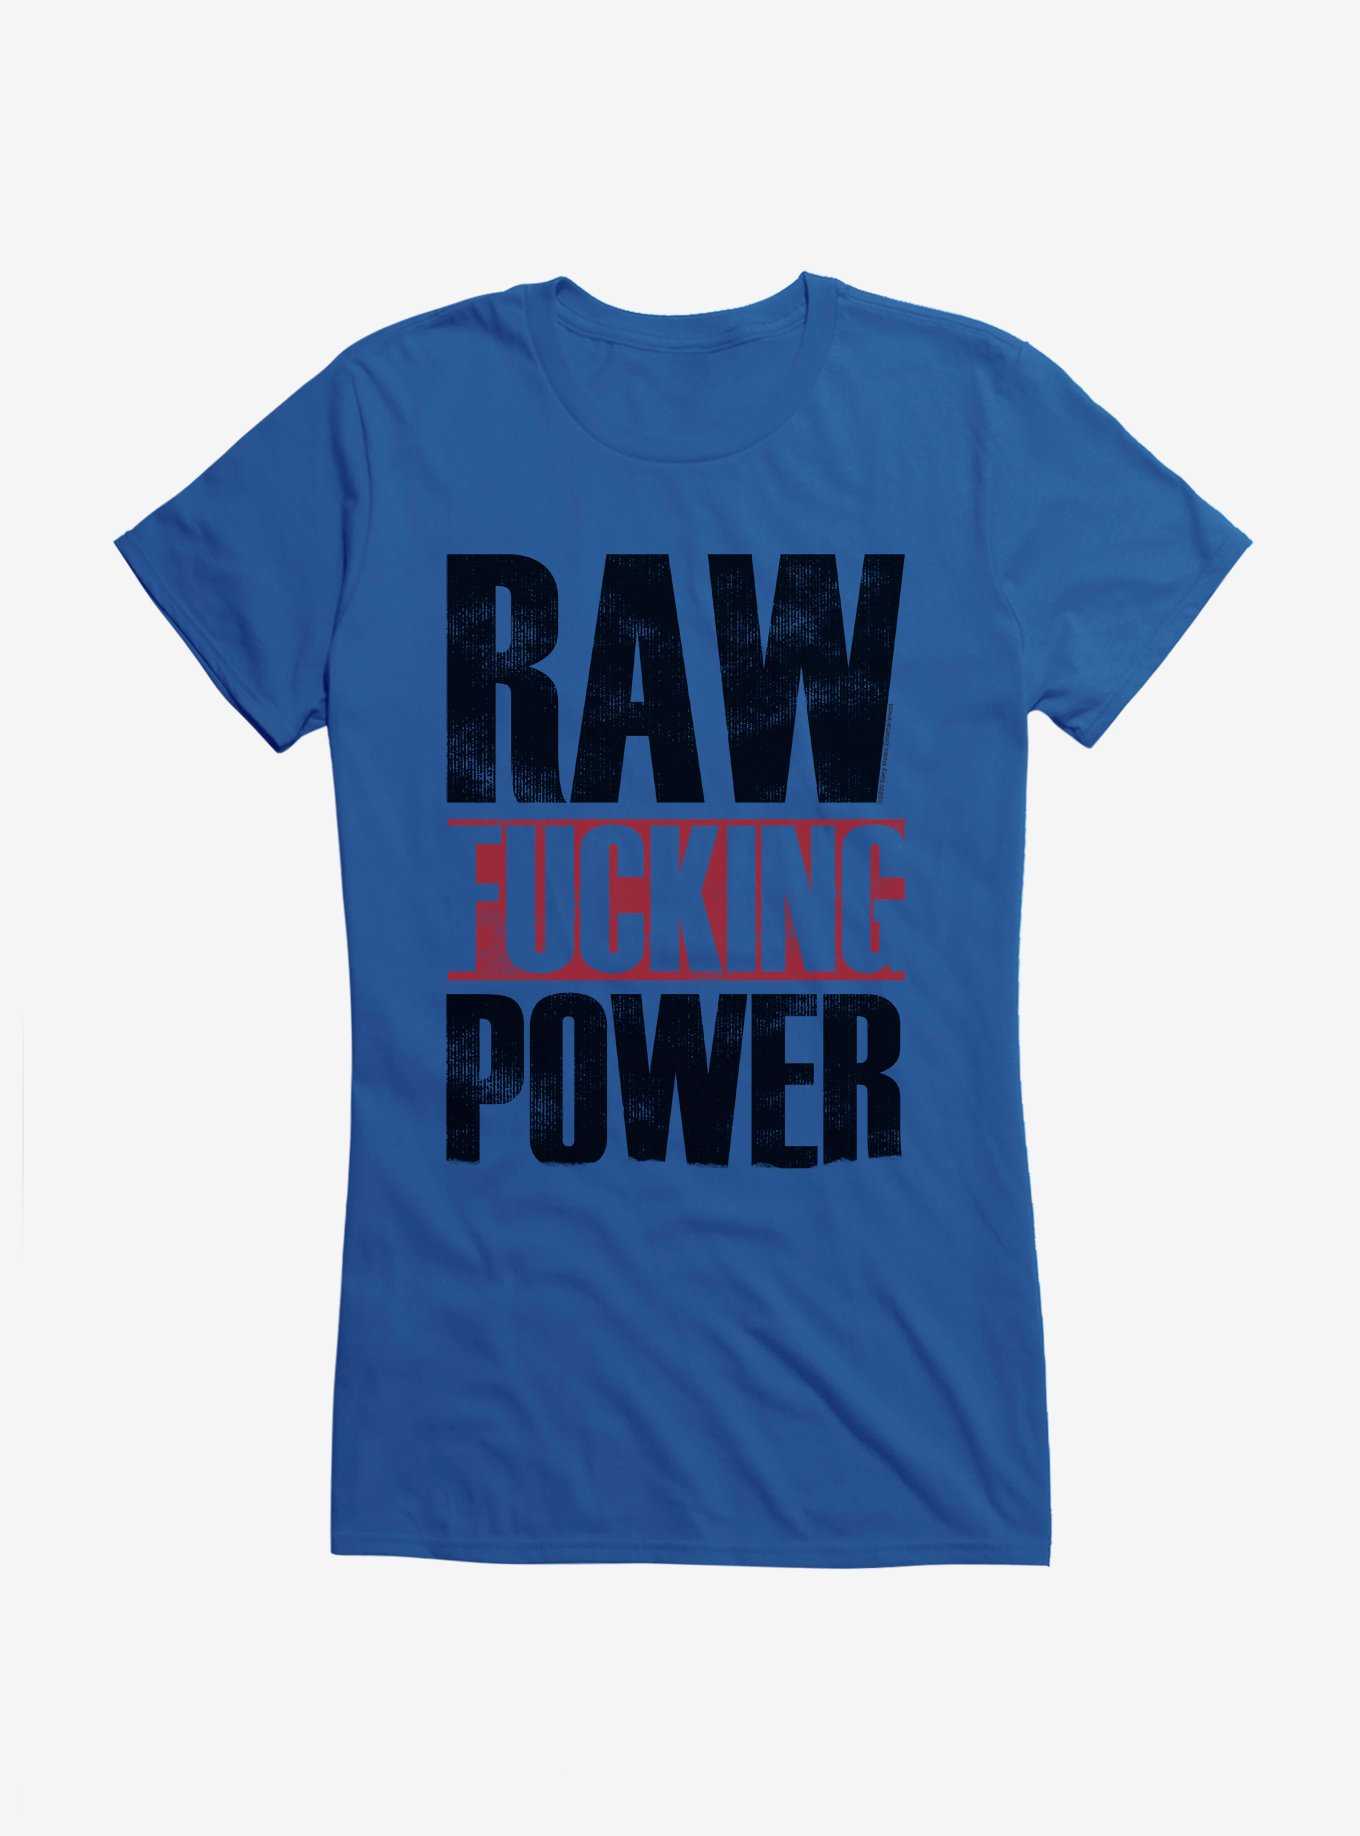 Iggy Pop Raw Power Colored Girls T-Shirt, , hi-res